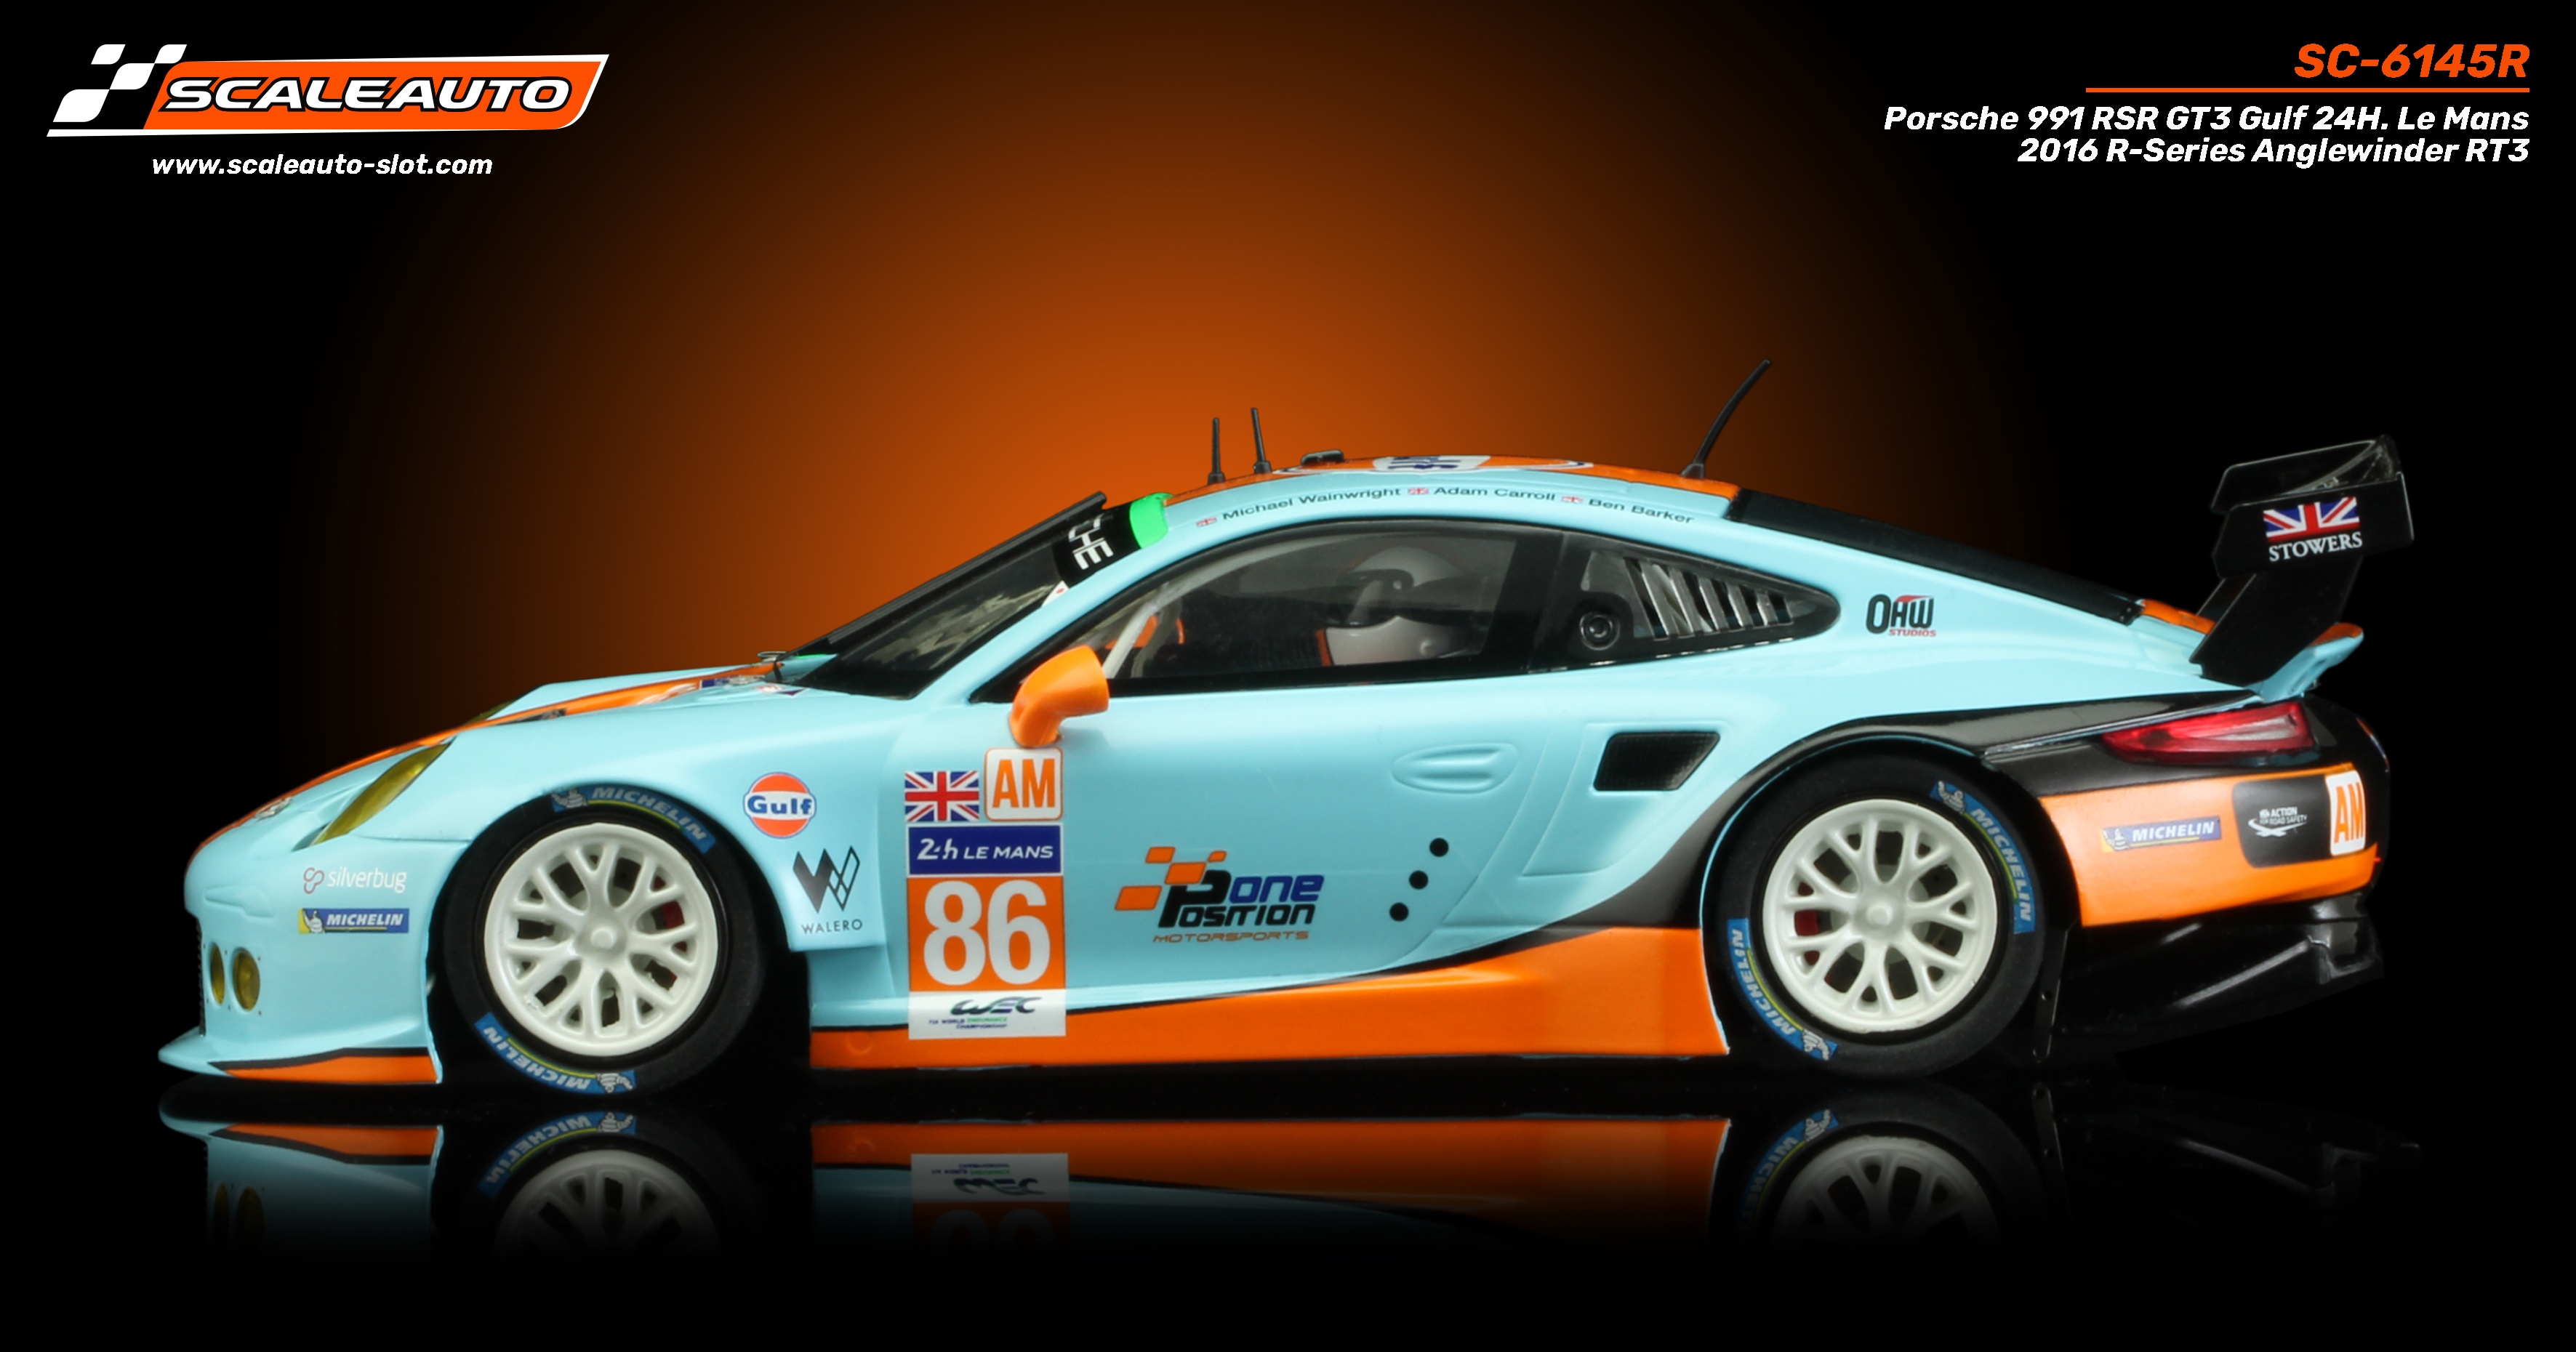 SC-6145R Porsche 991 RSR GT3 Gulf 24H. Le Mans 2016 R-Series